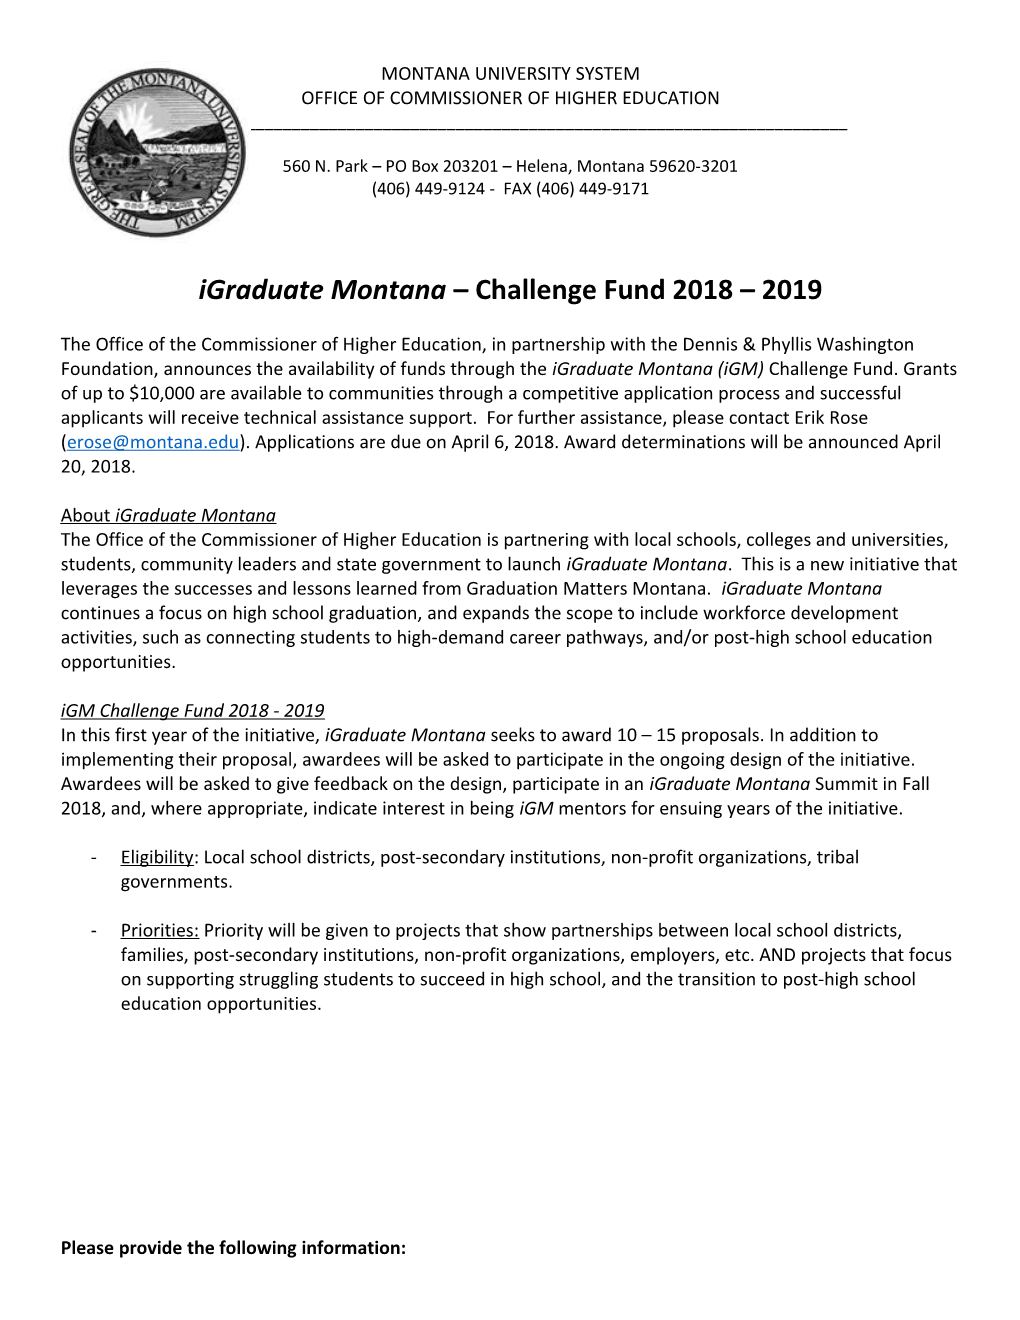 Igraduate Montana Challenge Fund 2018 2019